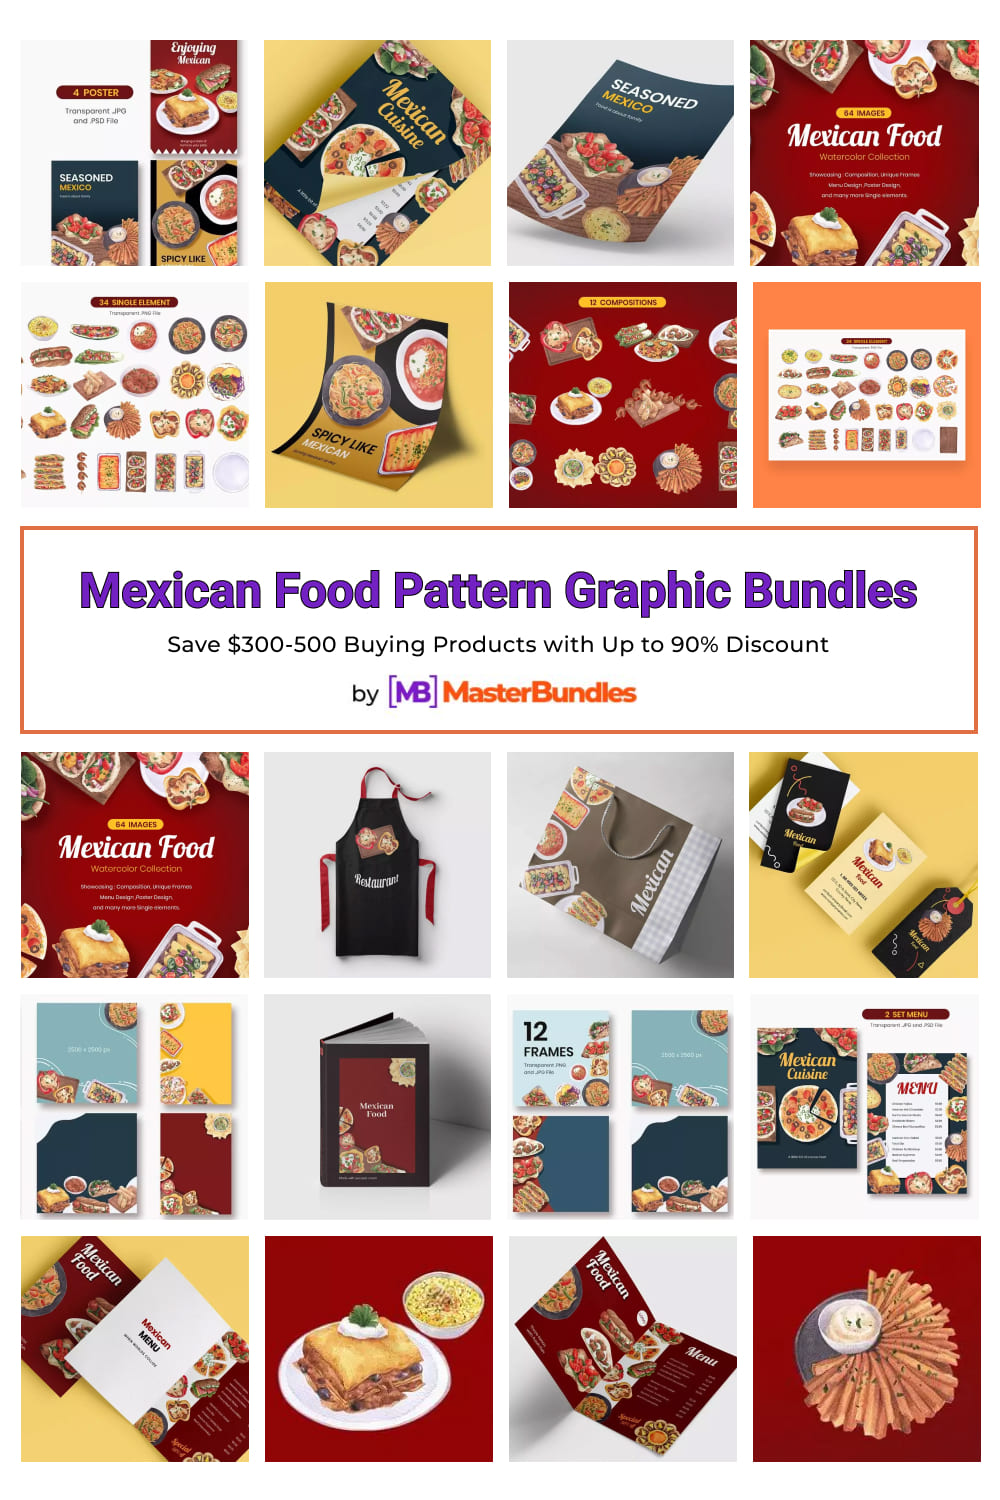 Mexican Food Pattern Graphic Bundles Pinterest image.